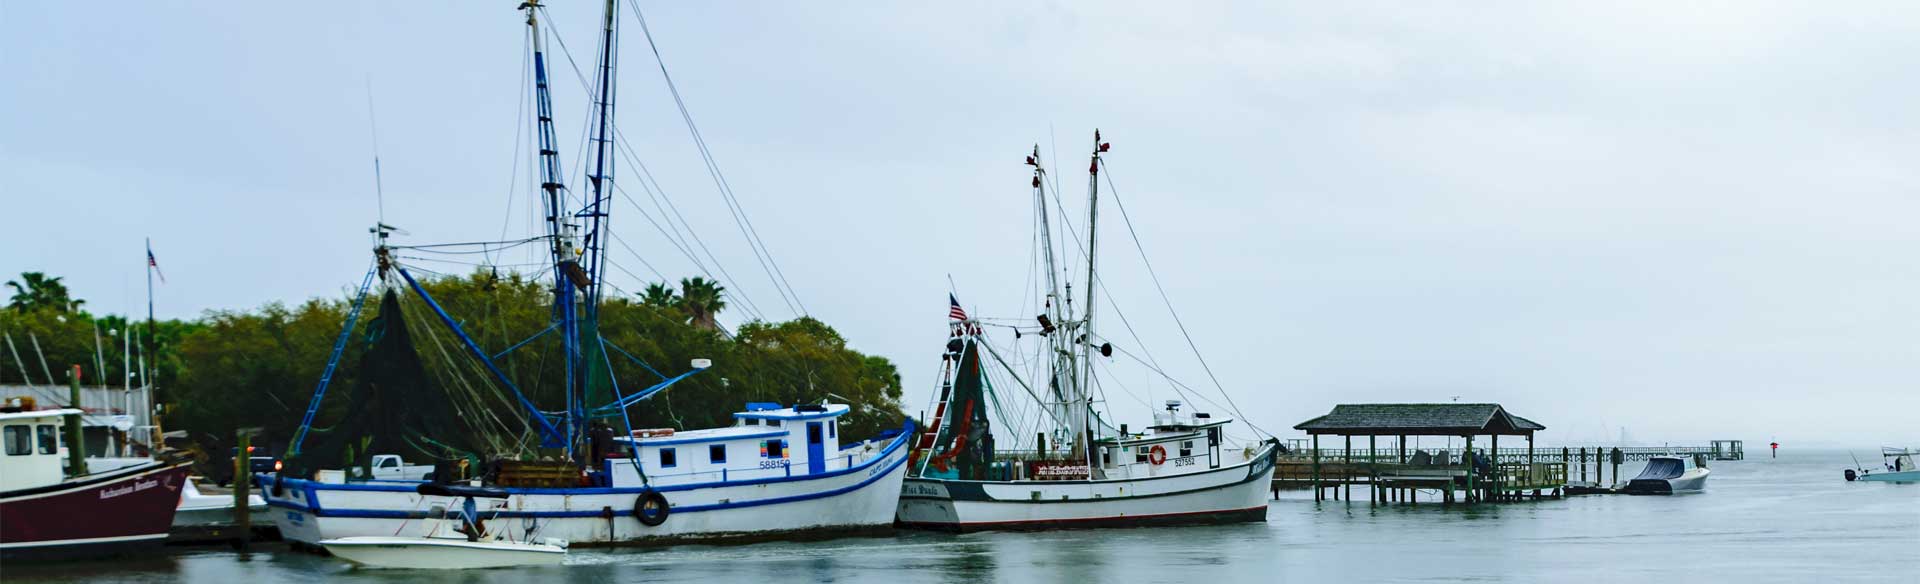 Shem Creek Shrimp Trawlers by Terry Ott on Flickr